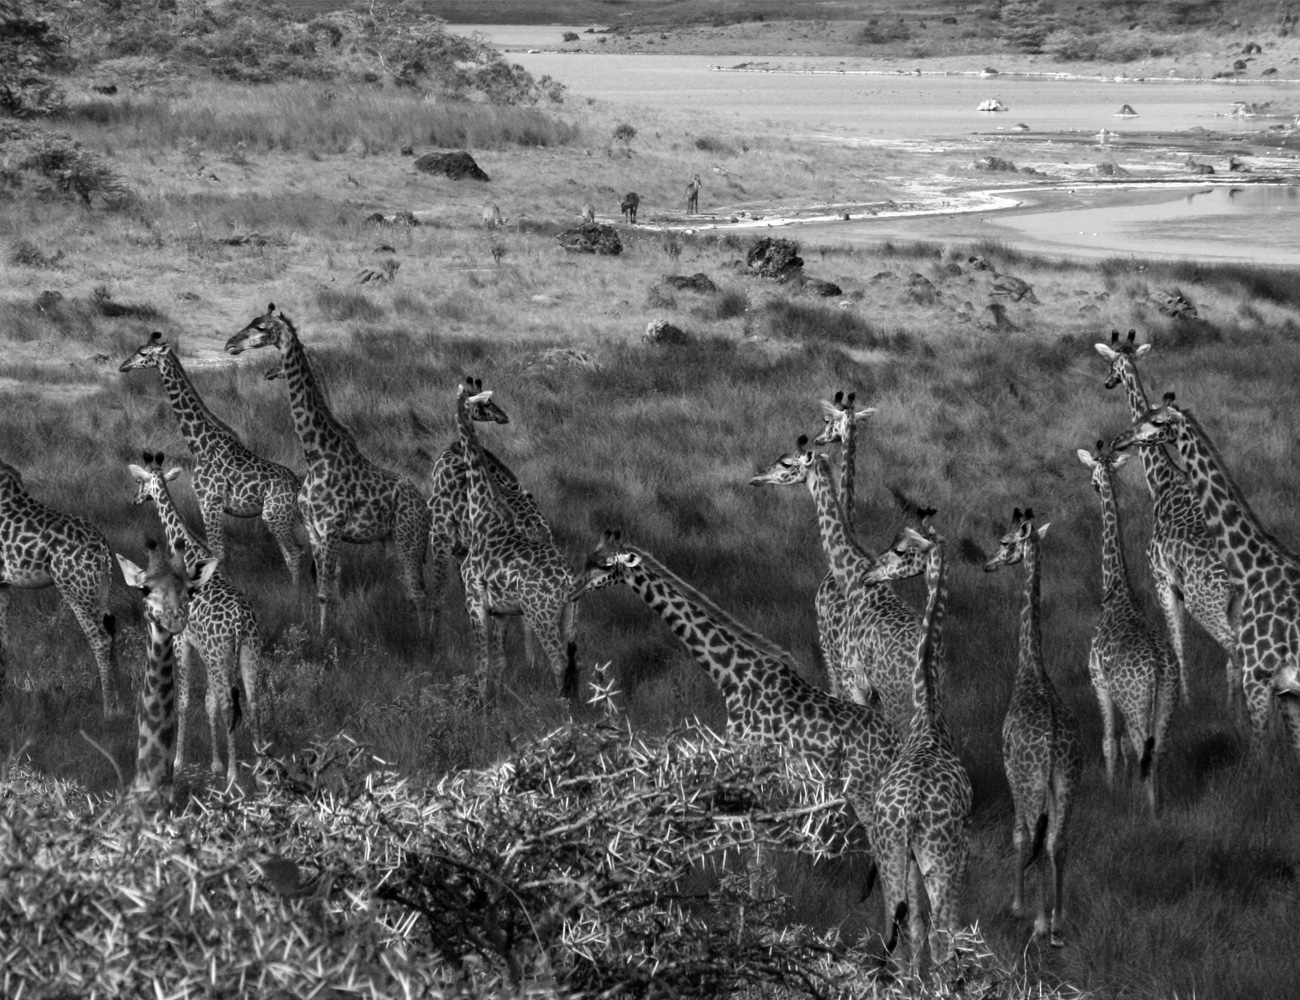 Giraffes at Arusha National Park